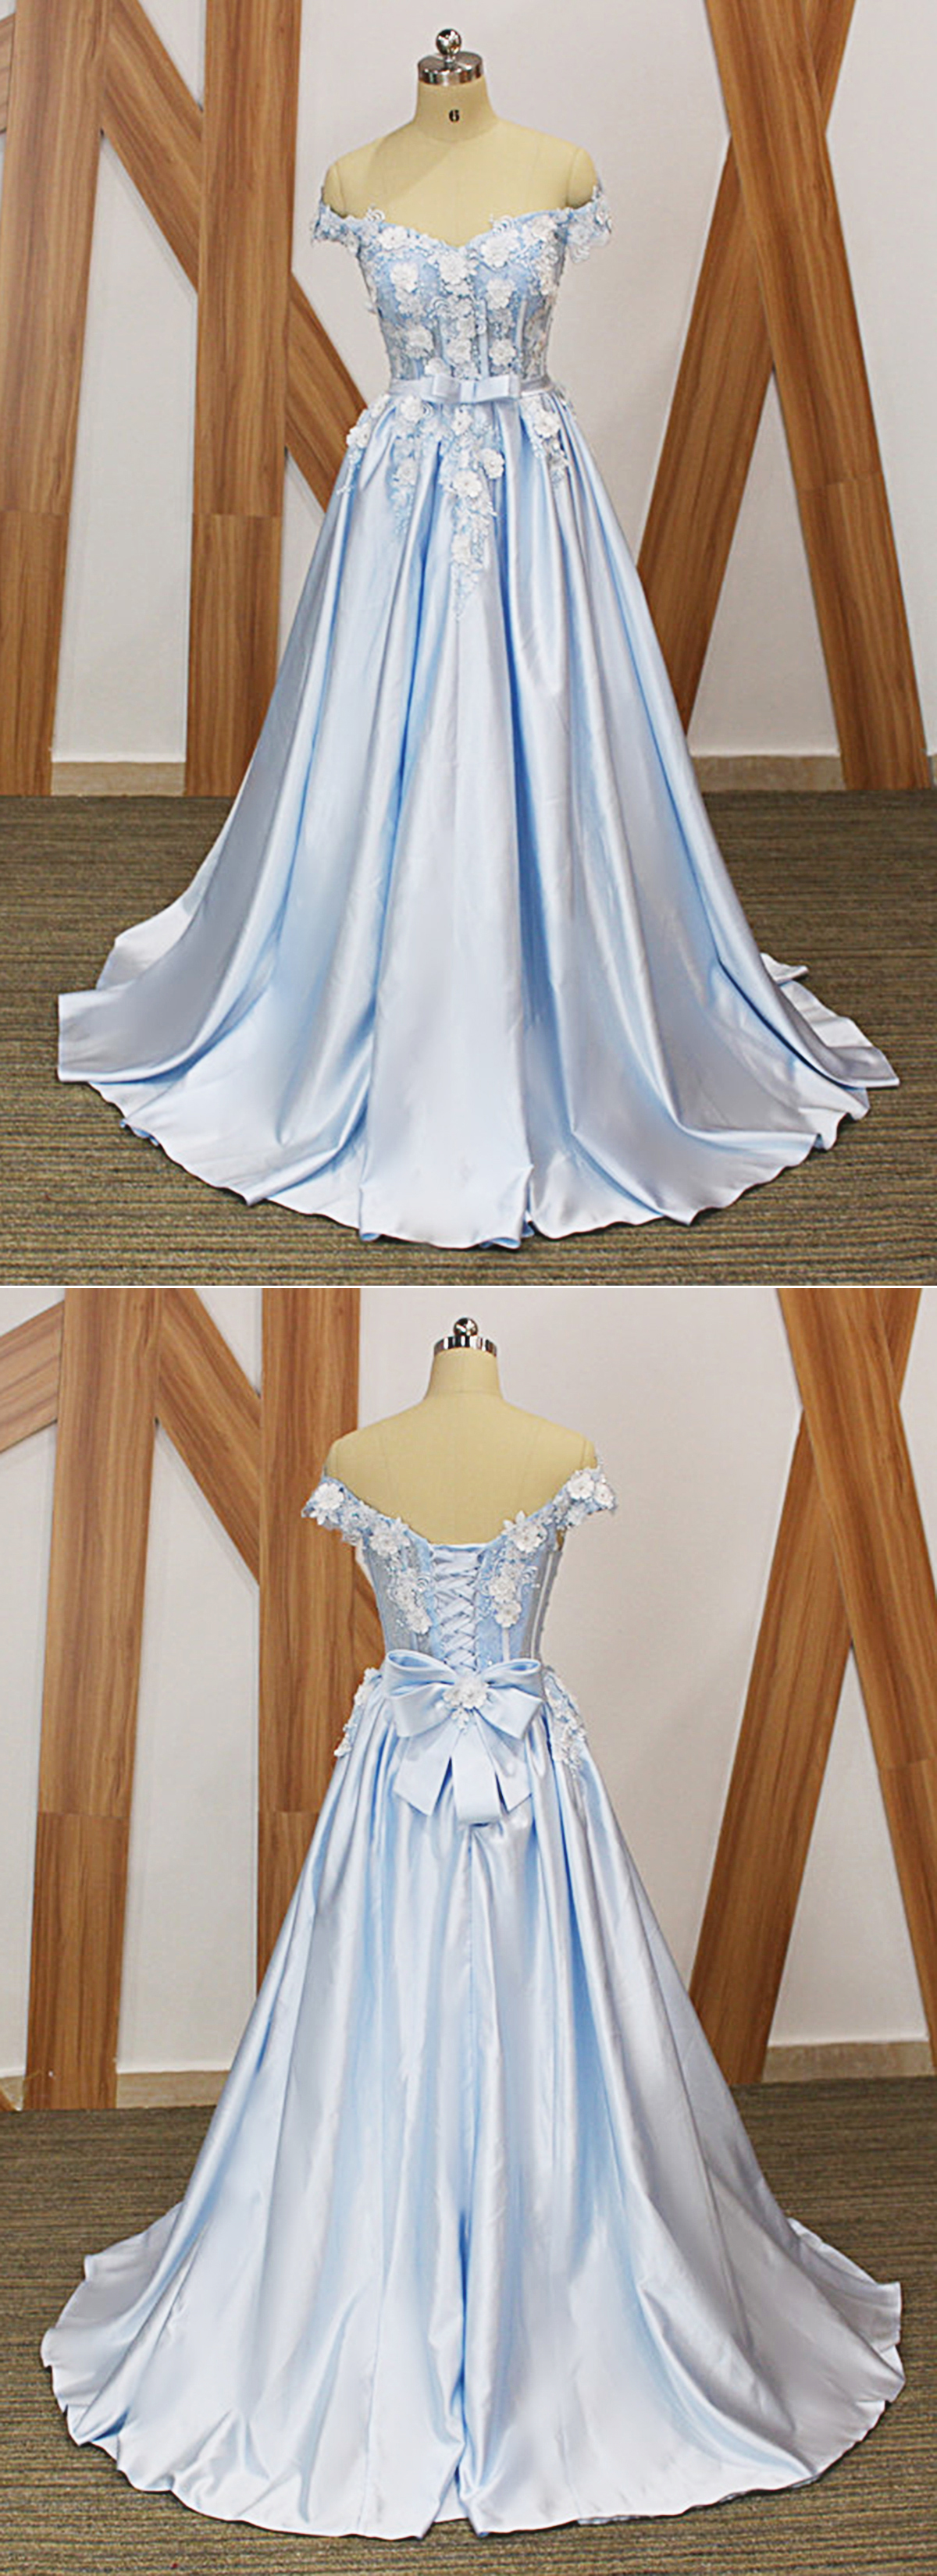 Baby Blue Satin Off Shoulder Long Sweetheart Senior Prom Dress With Applique,pl0899